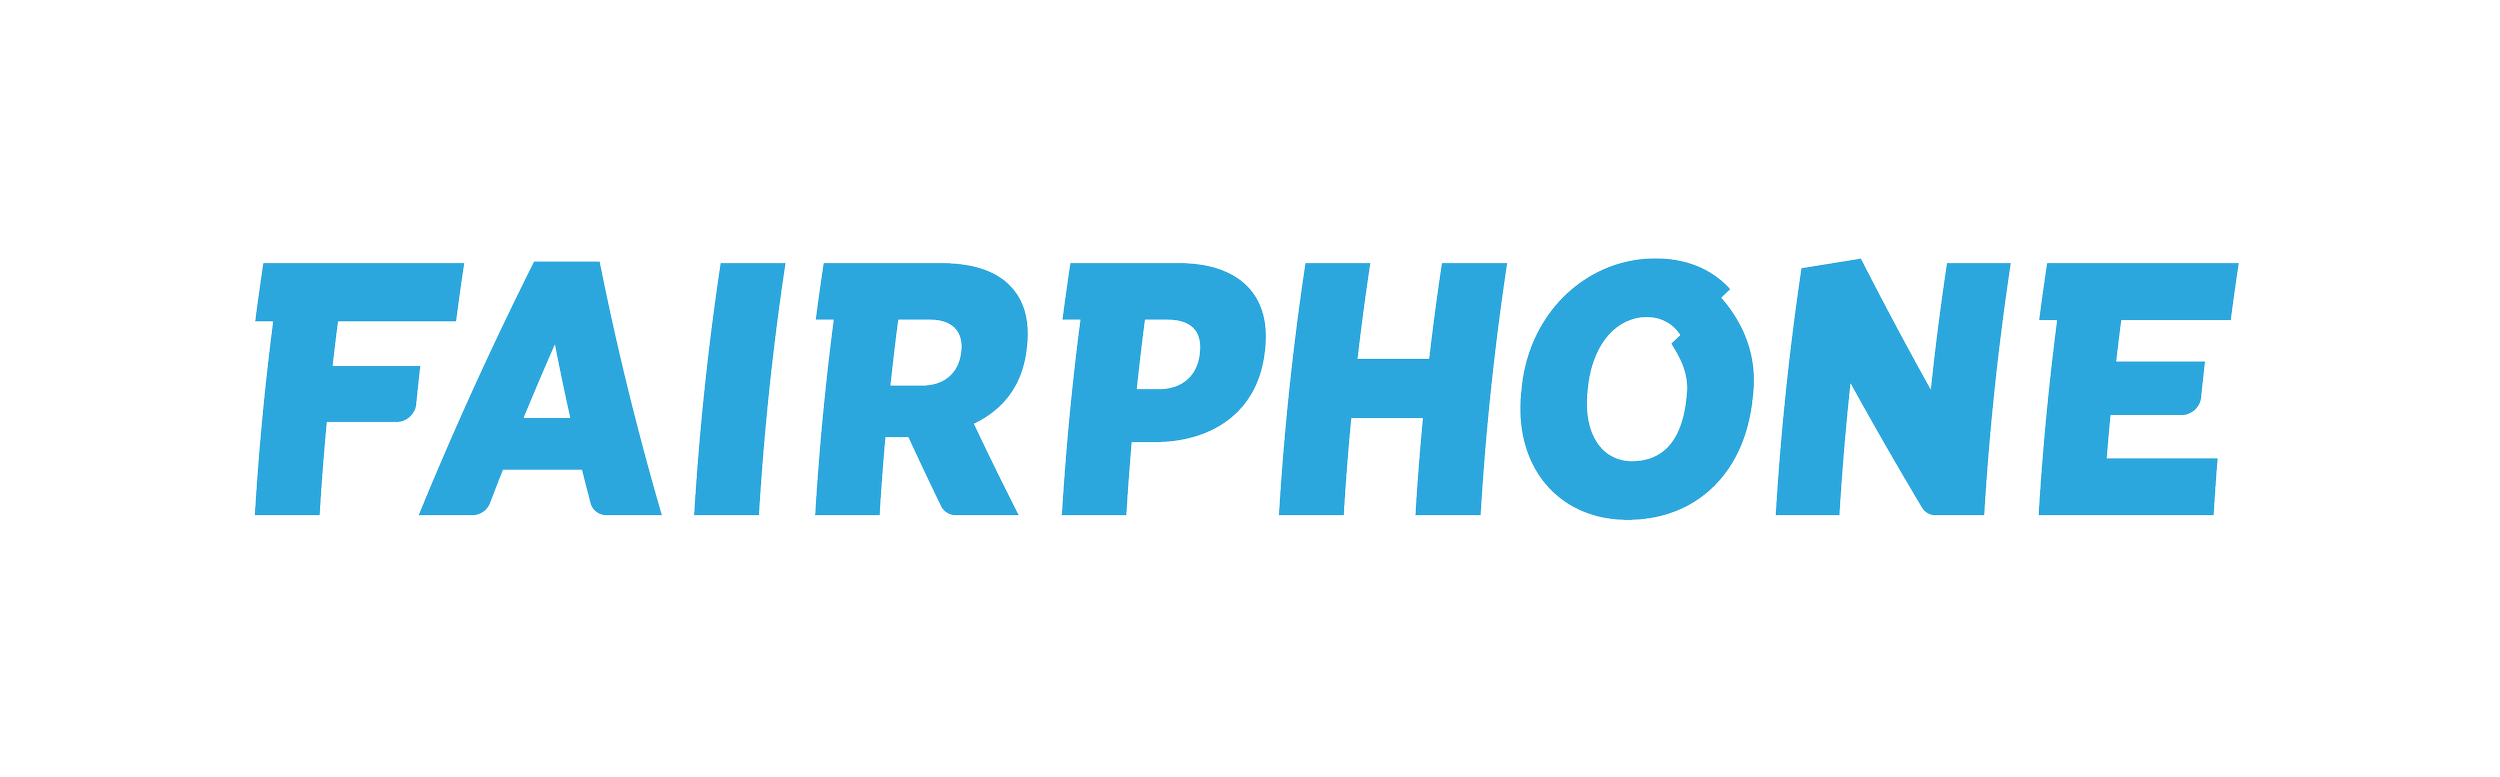 Fairphone-logo.png